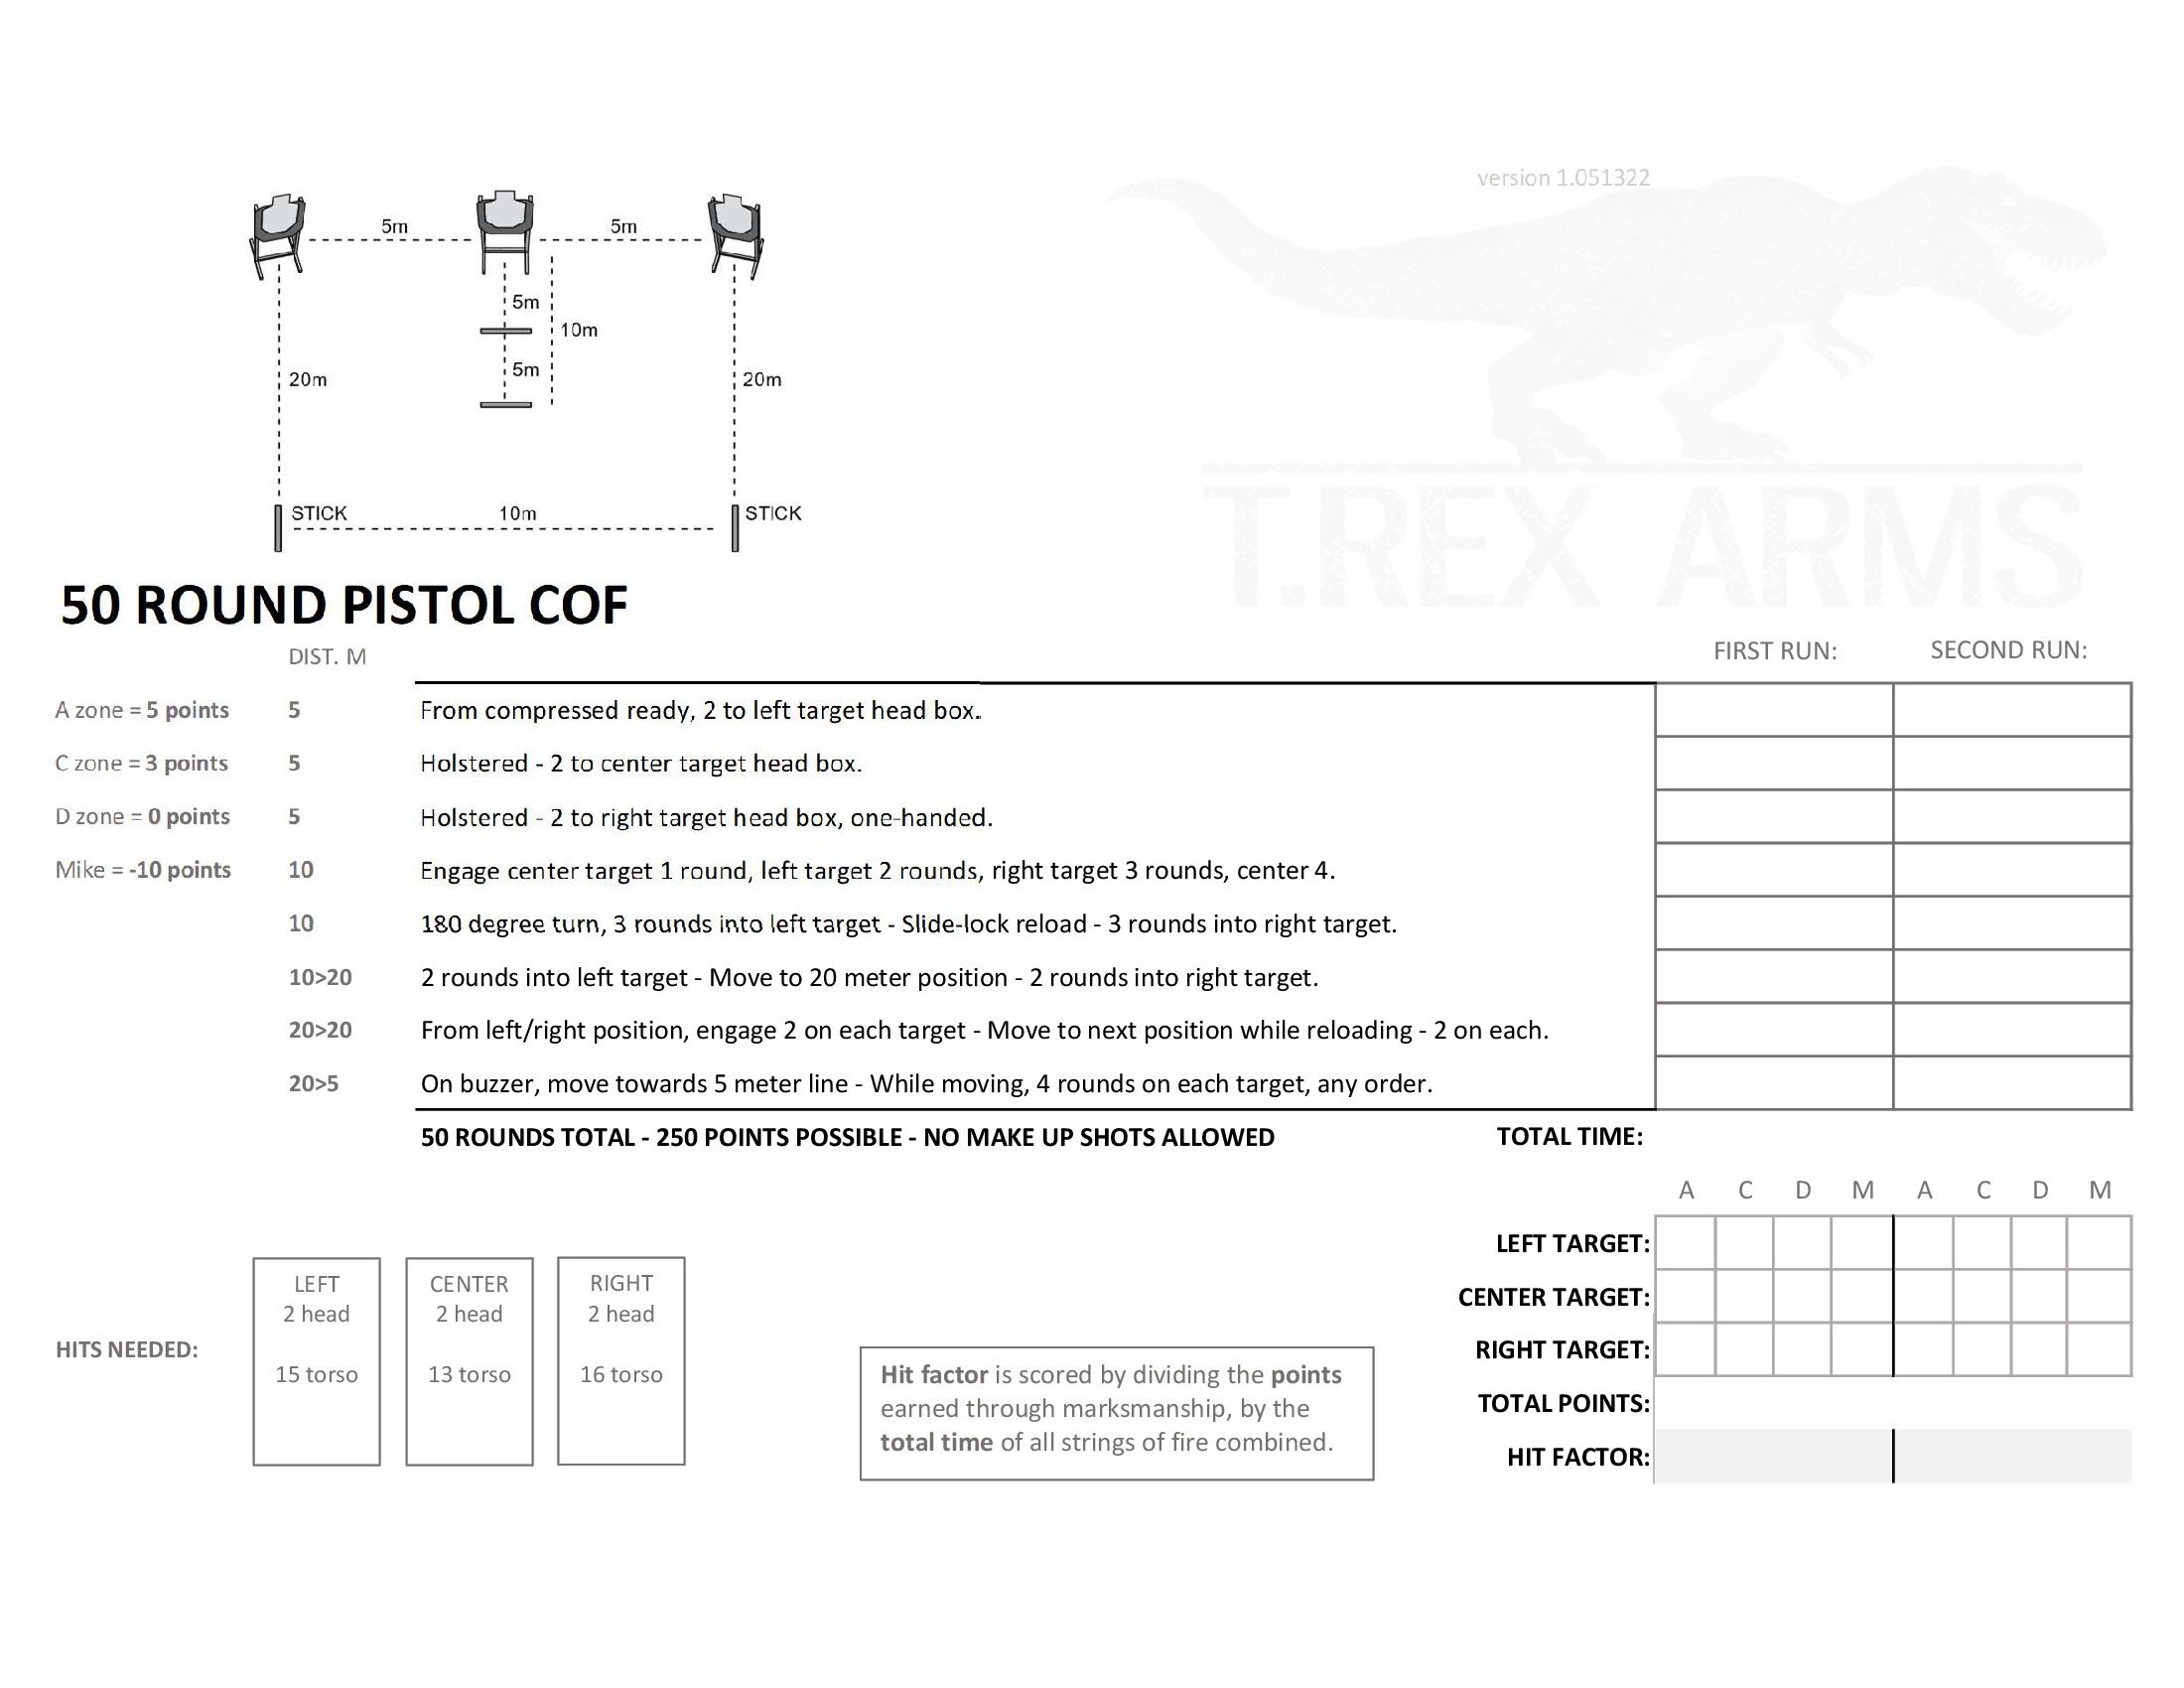 50 Round Pistol COF print-out